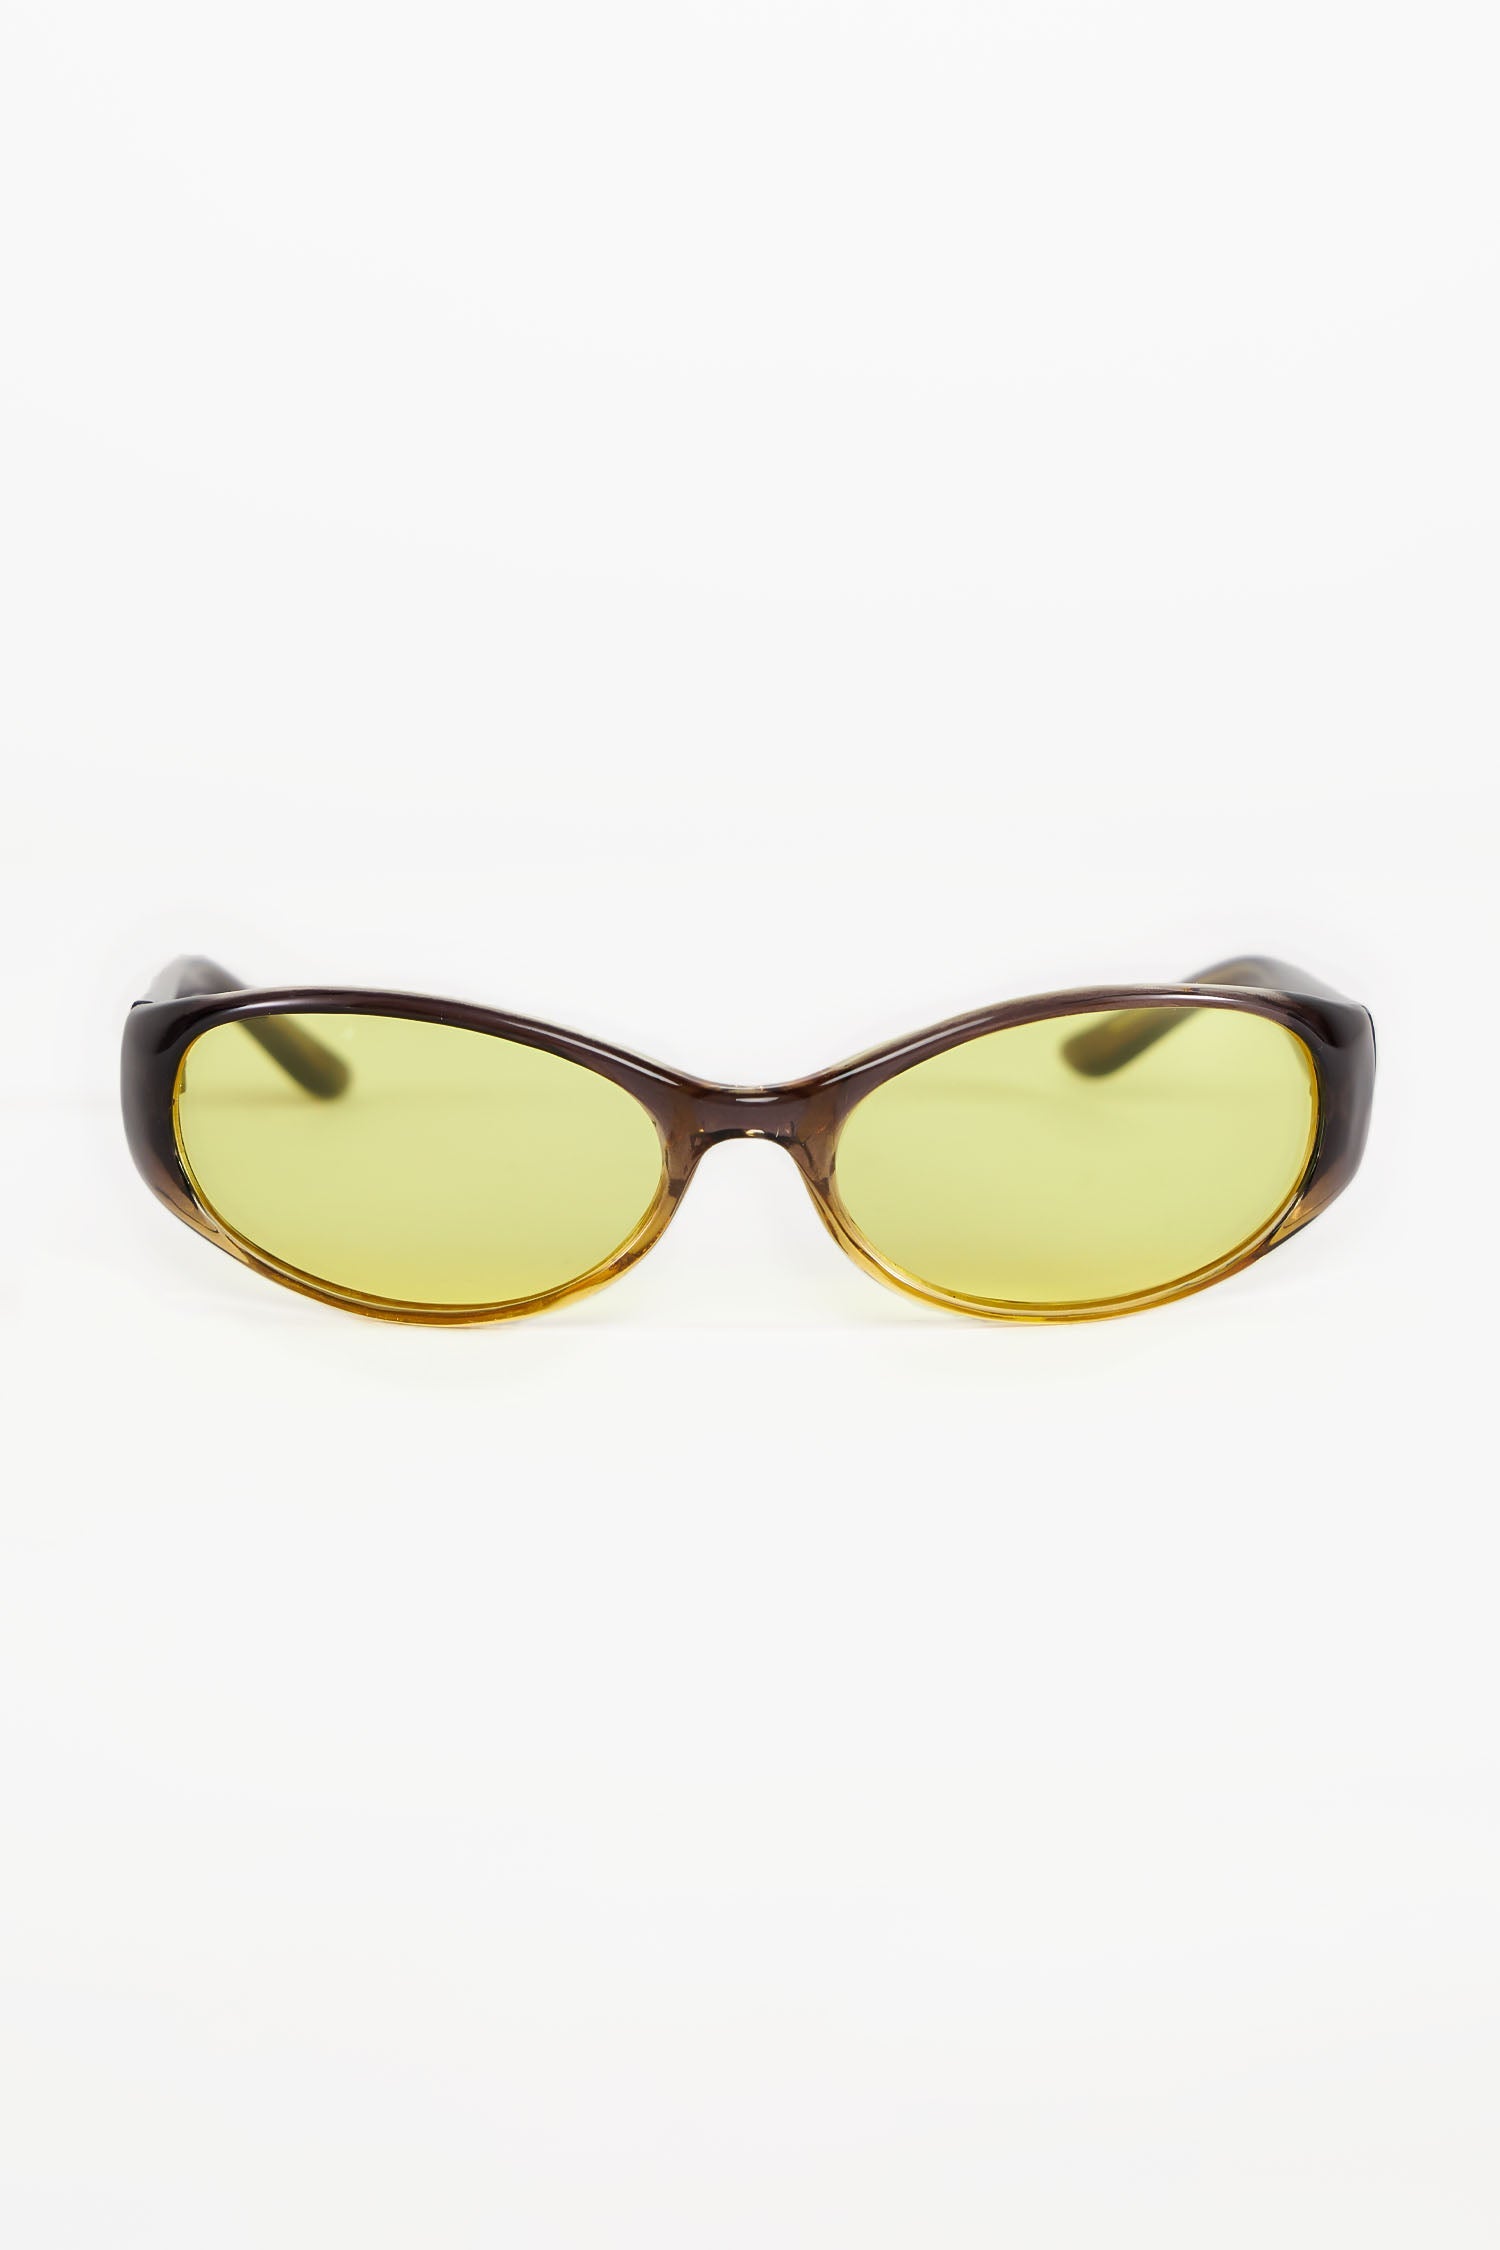 Chanel Sunglasses with Rhinestone CCs  Chanel sunglasses, Fashion eye  glasses, Stylish glasses